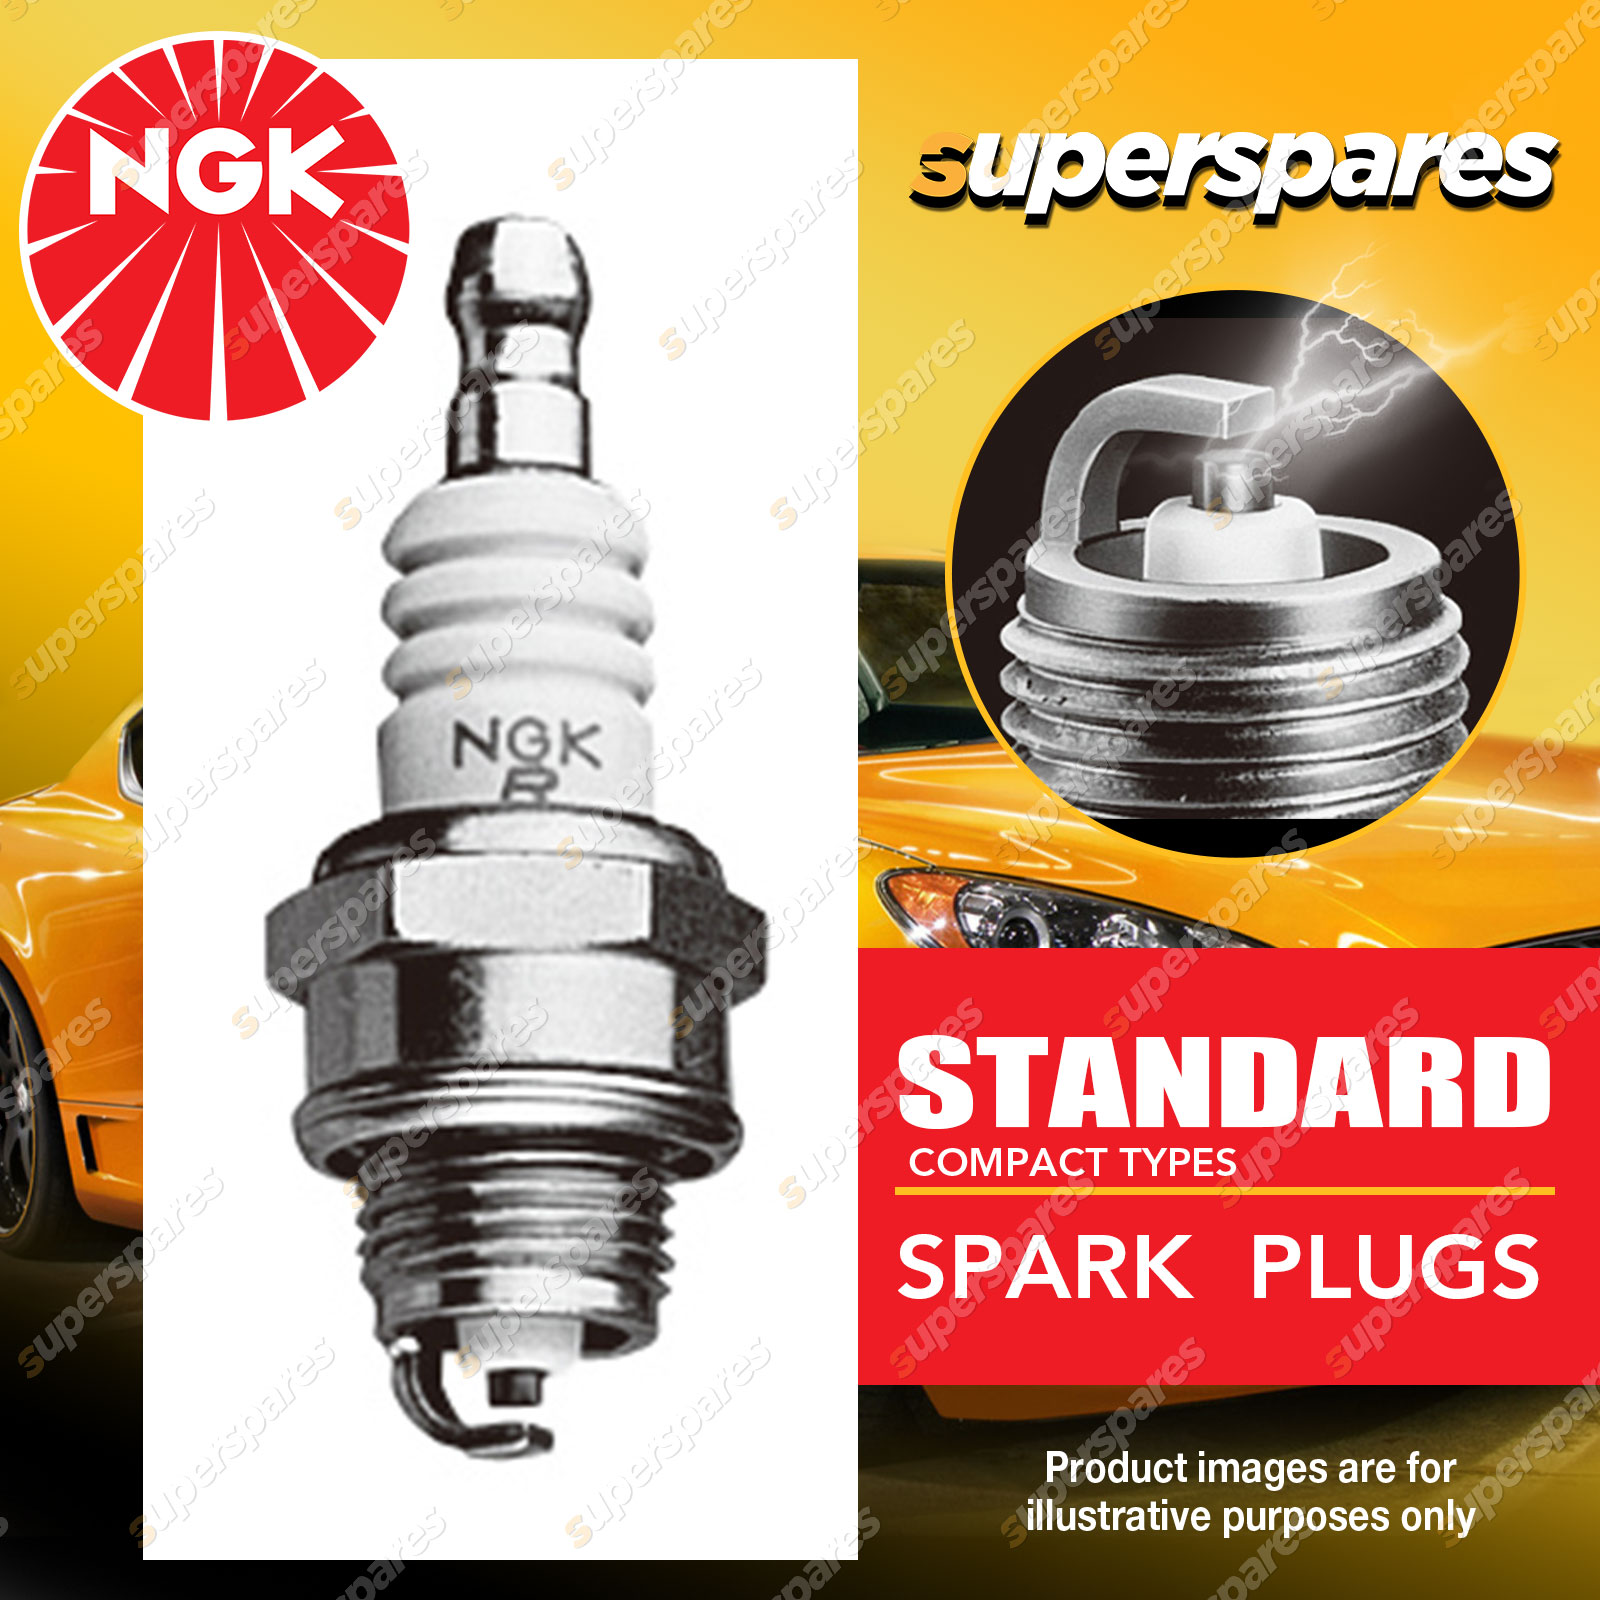 NGK Compact Spark Plug BPMR6A-10 - Premium Quality Japanese Industrial